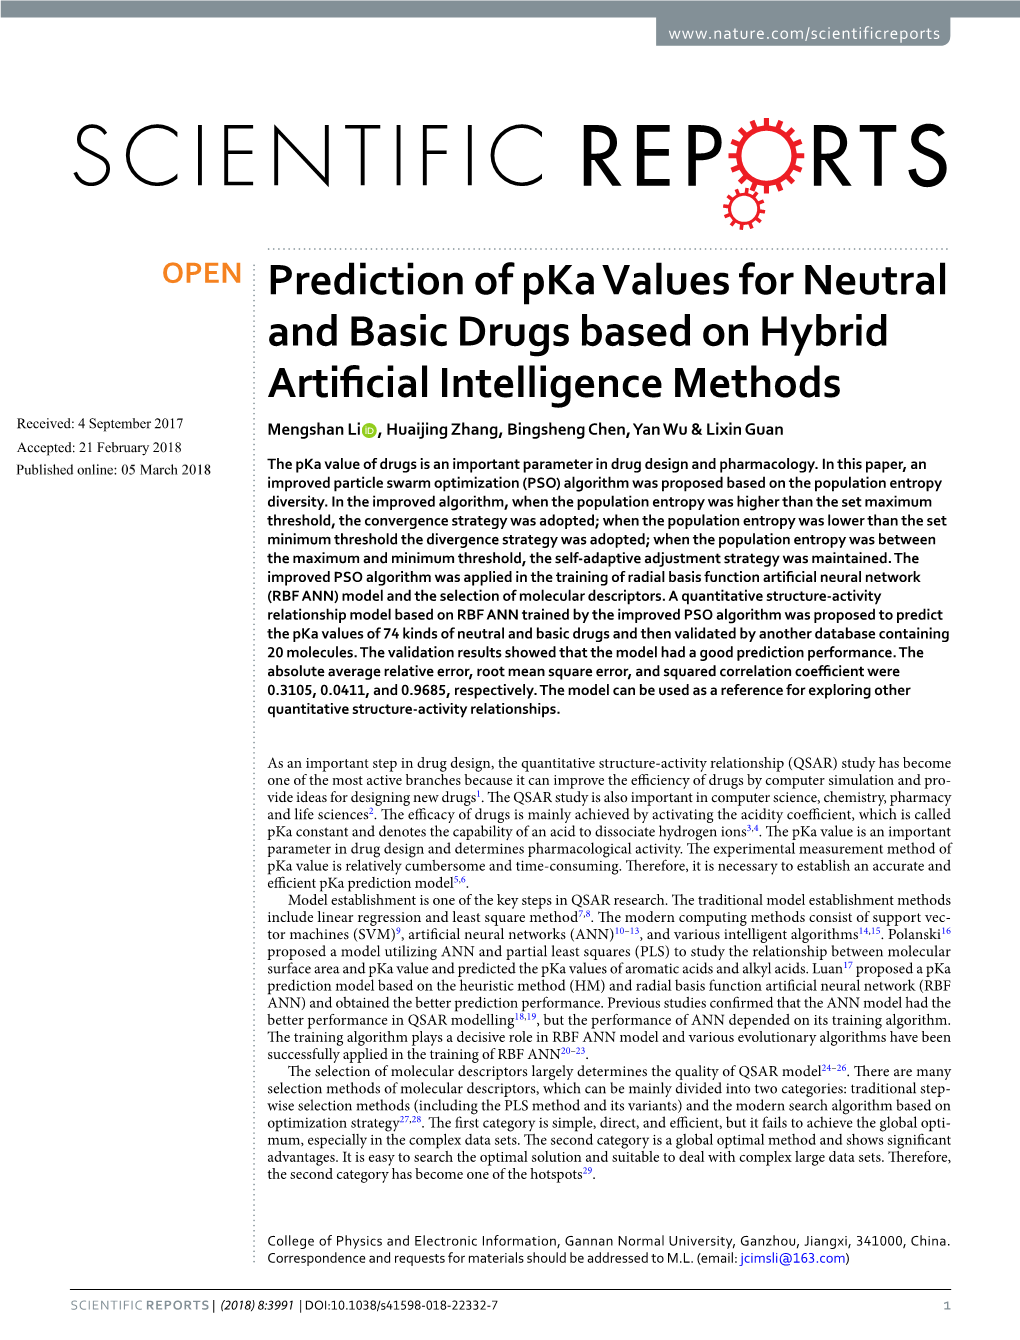 Prediction of Pka Values for Neutral and Basic Drugs Based on Hybrid